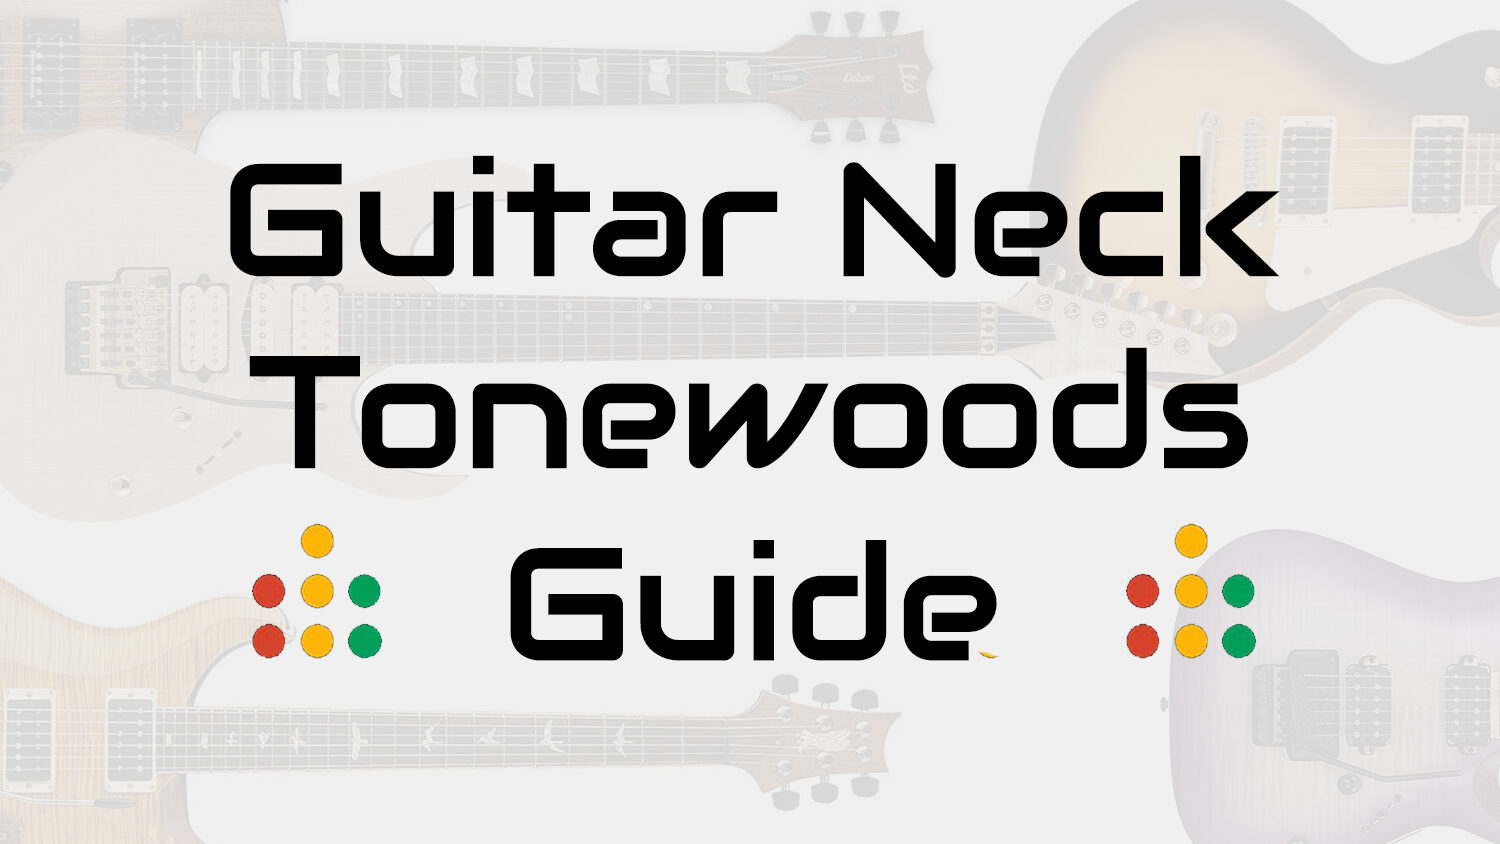 guitar neck tonewoods guide